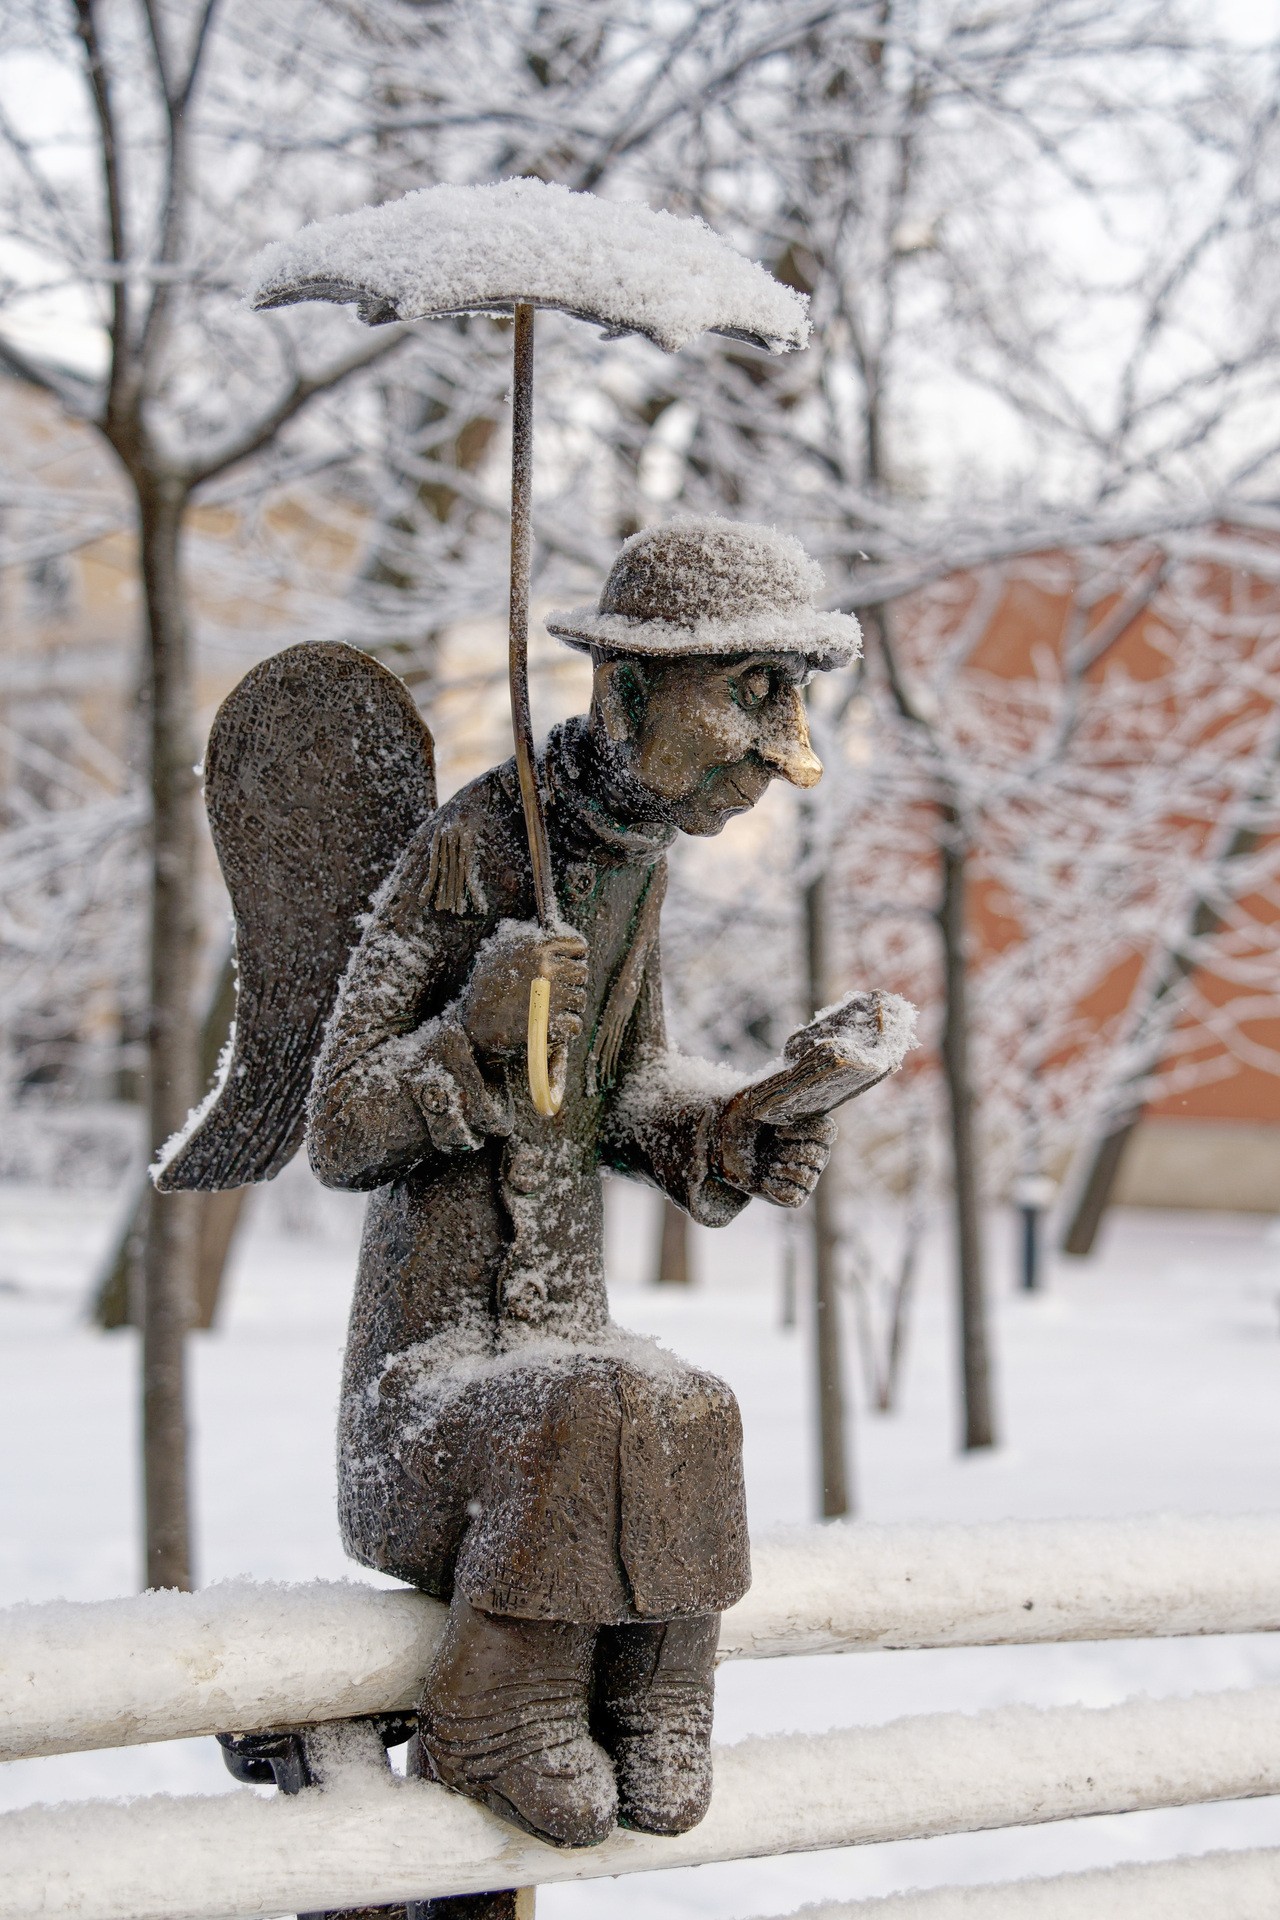 Петербургский ангел